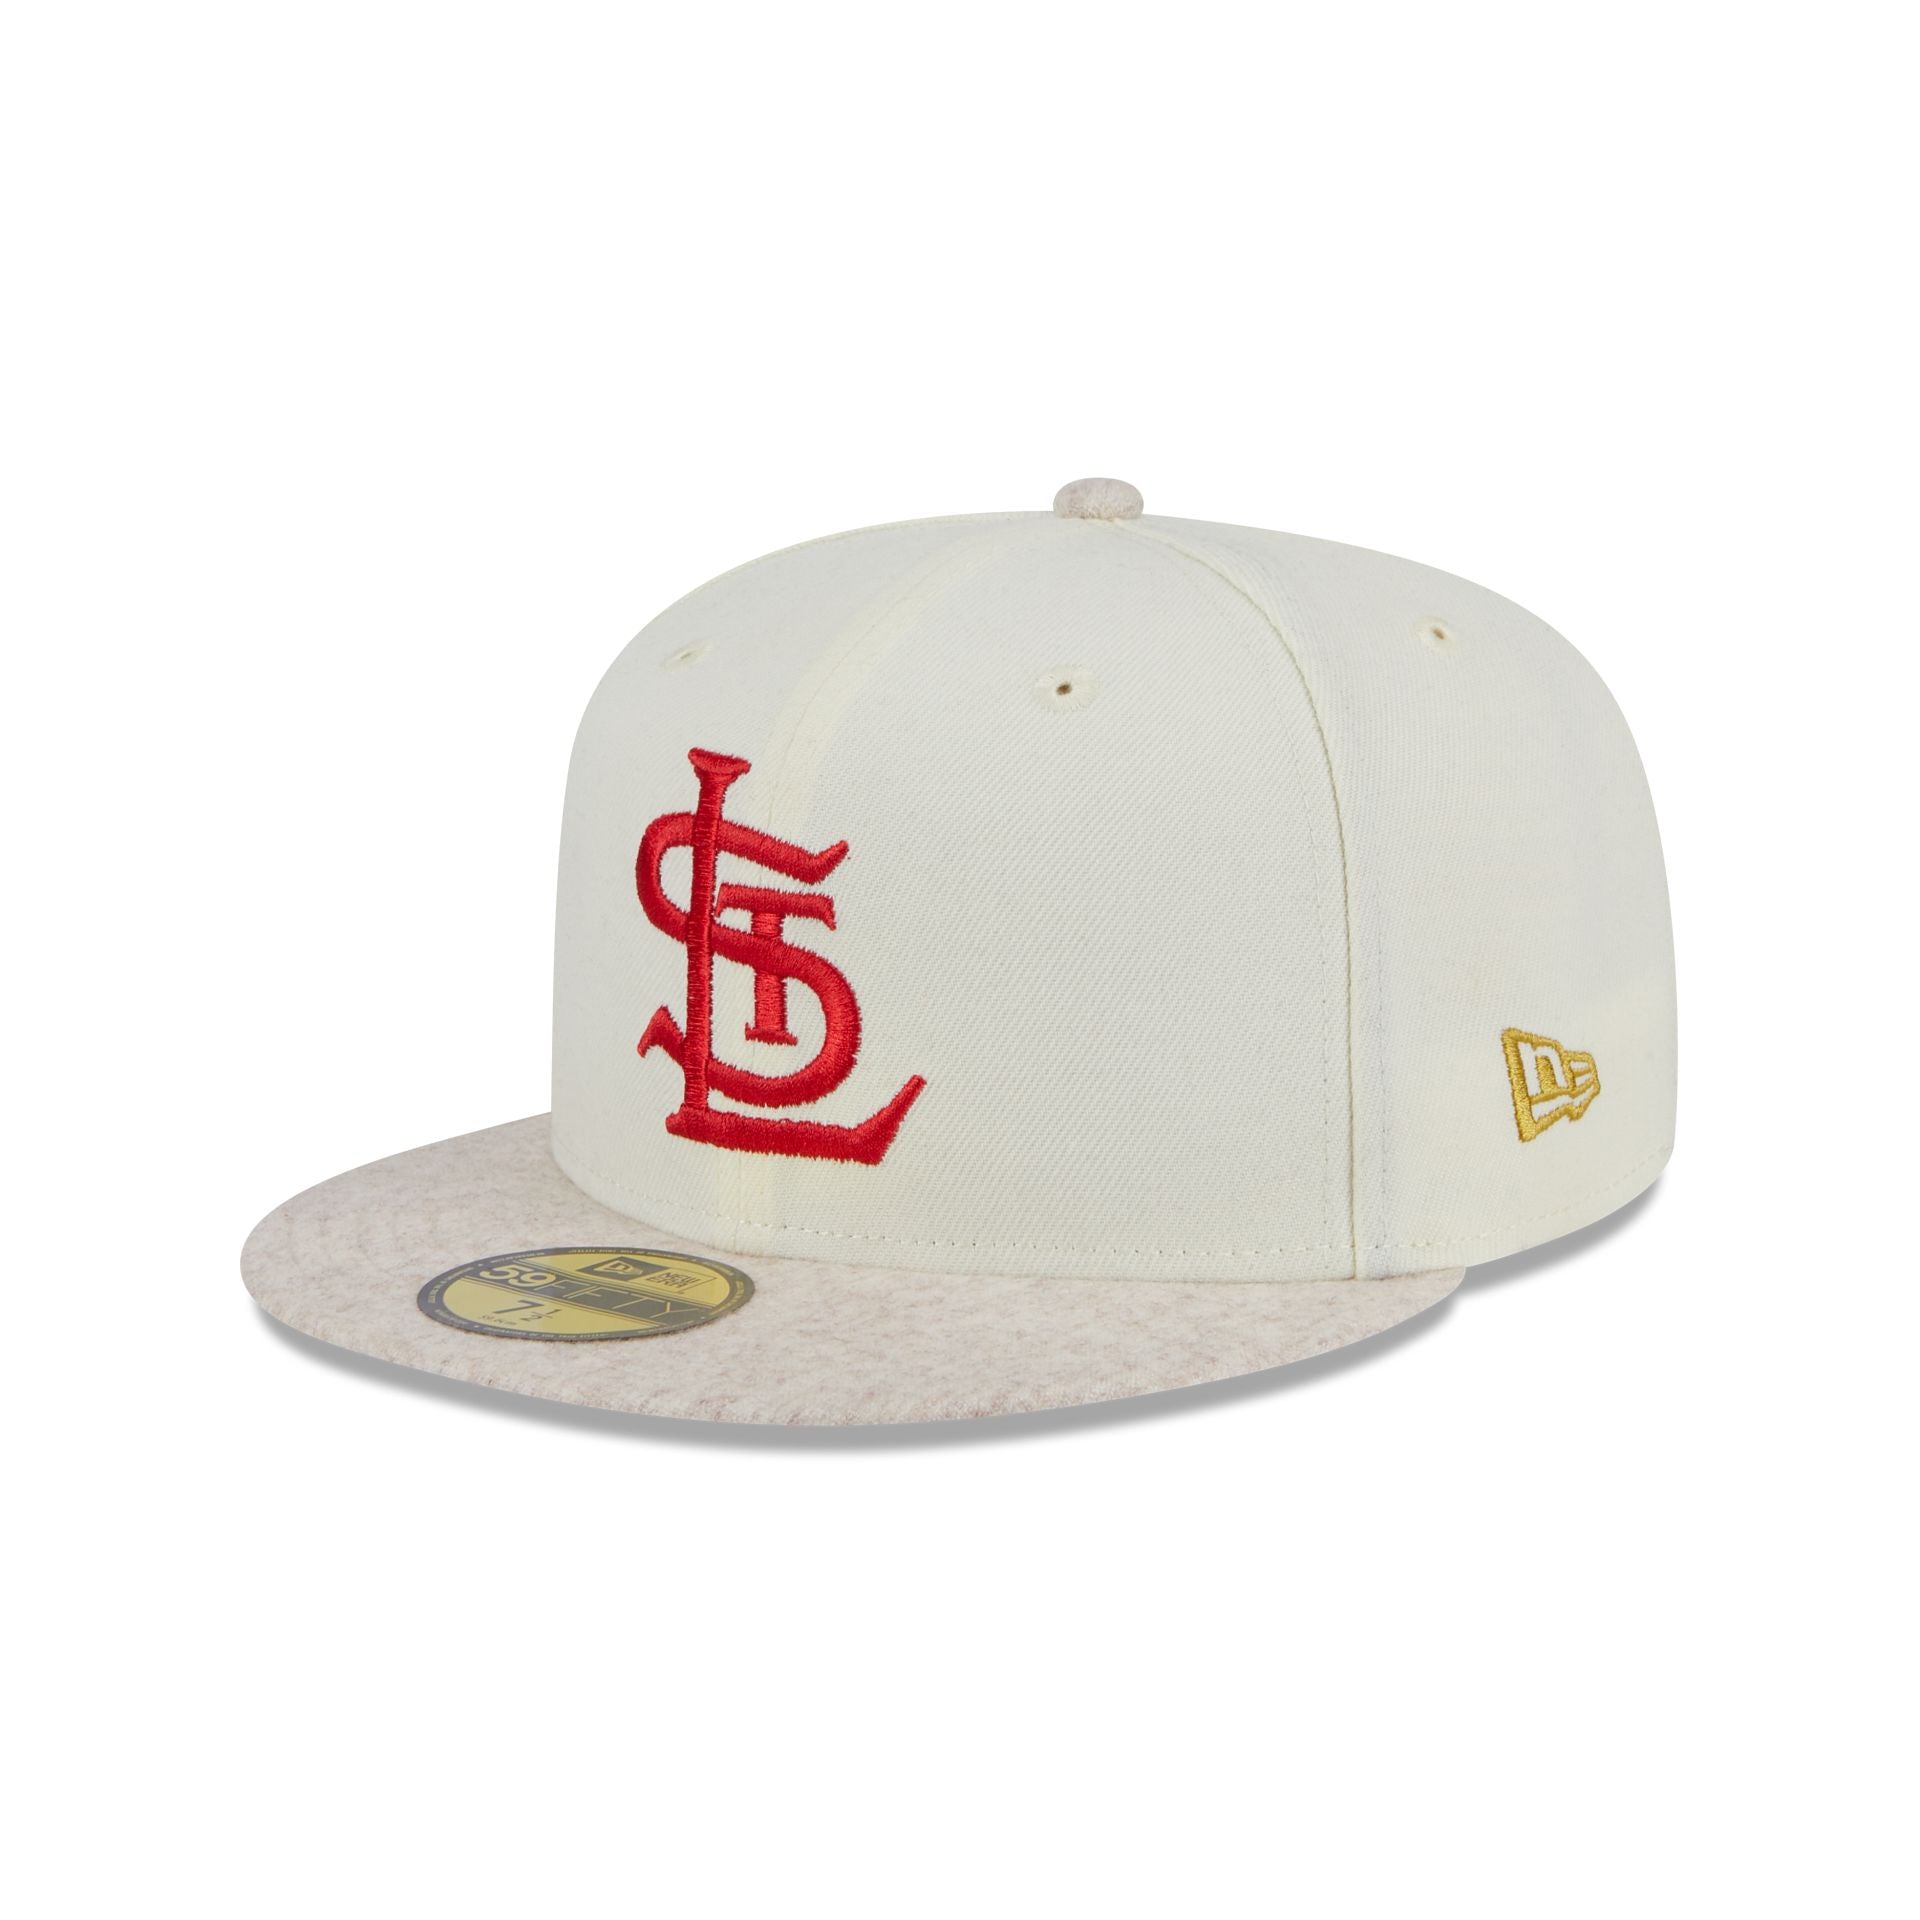 New Era, Accessories, Custom Stl Cardinals Fitted Hat